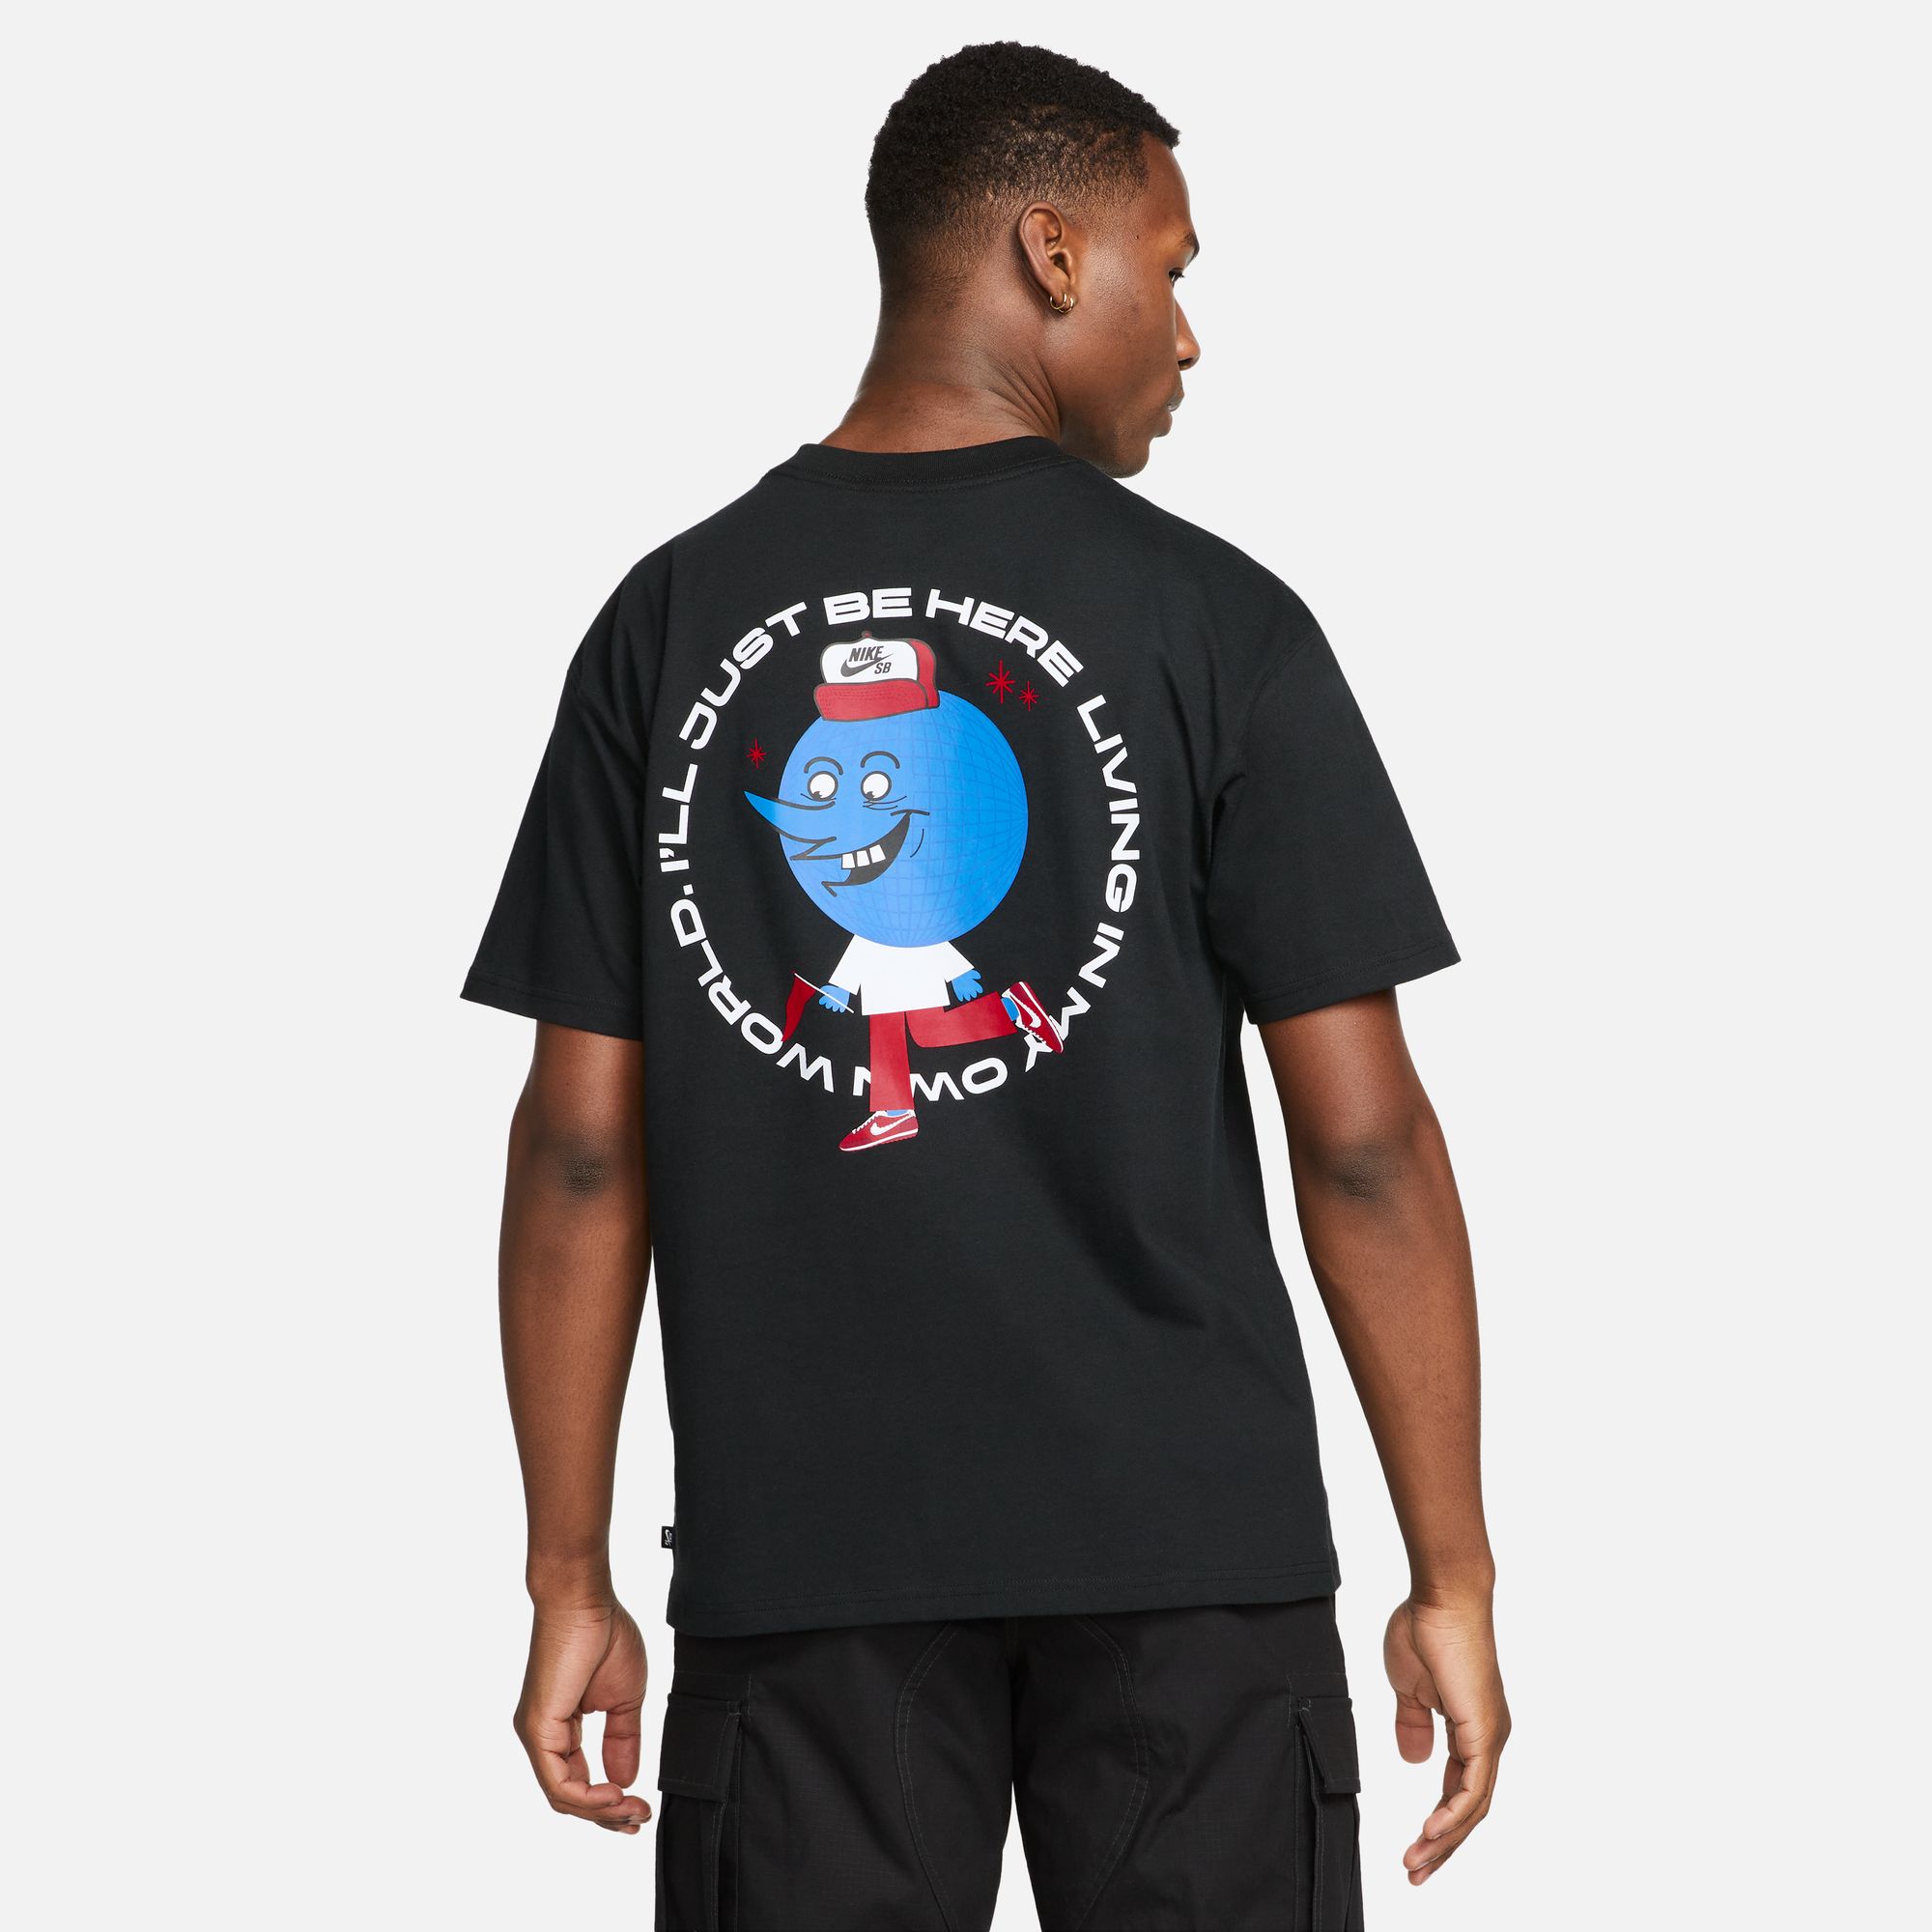 Nike SB Men's Skate T-Shirt Just Be Here Black 02